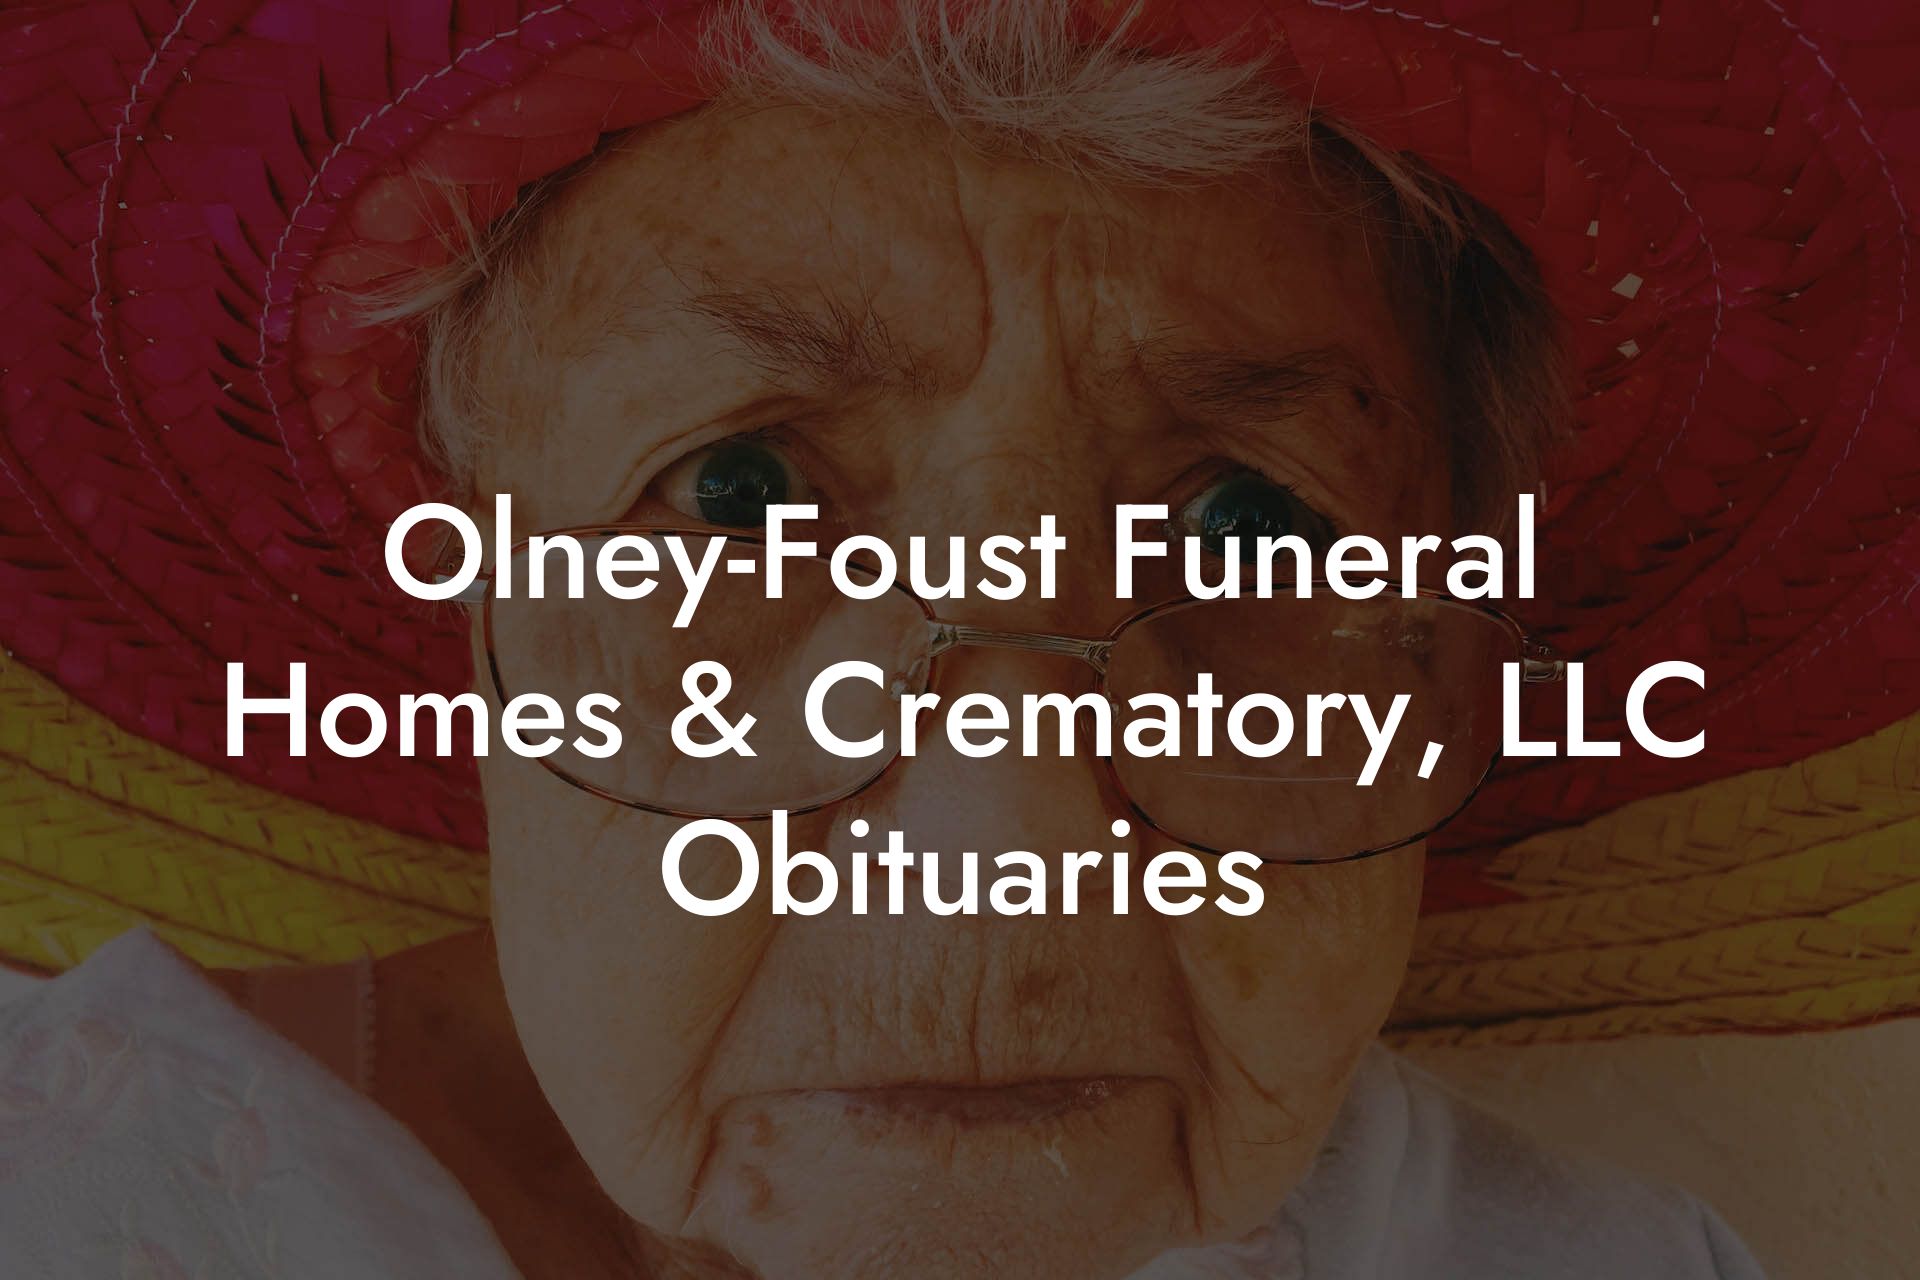 Olney-Foust Funeral Homes & Crematory, LLC Obituaries